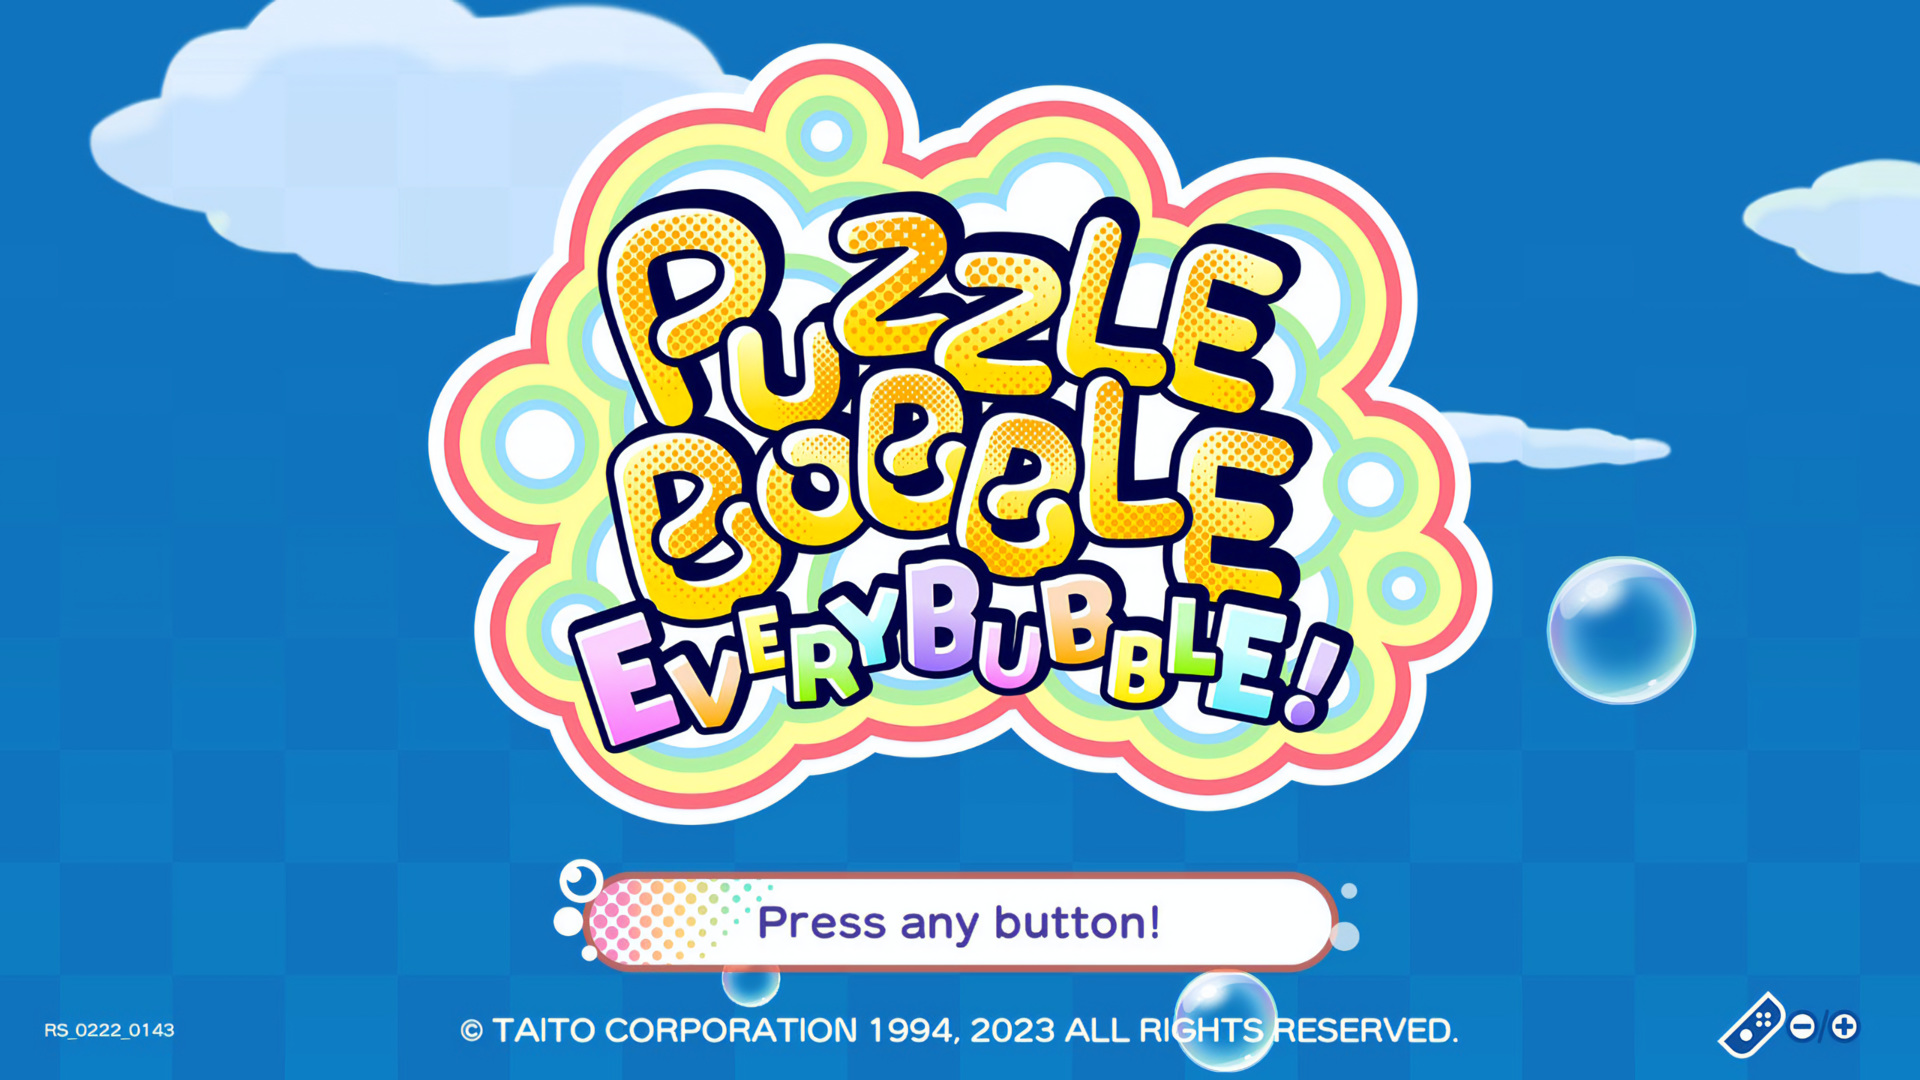 Puzzle Bobble Everybubble! - vgBR